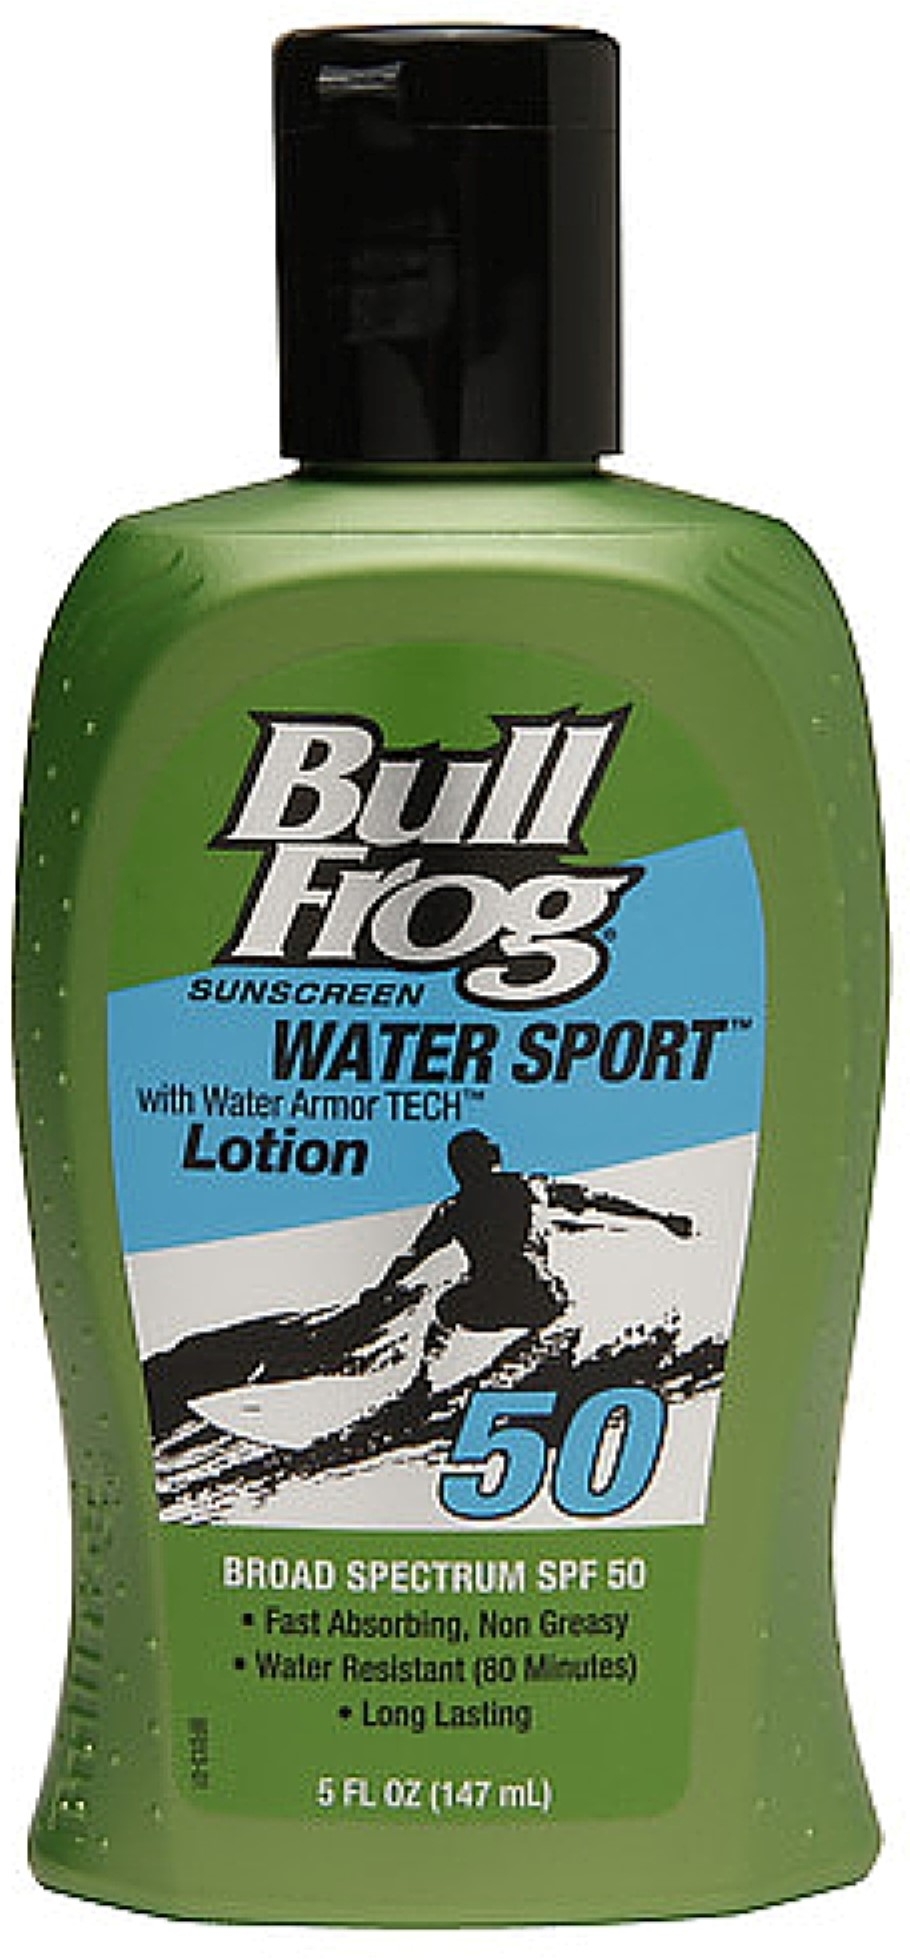 bullfrog sunscreen target